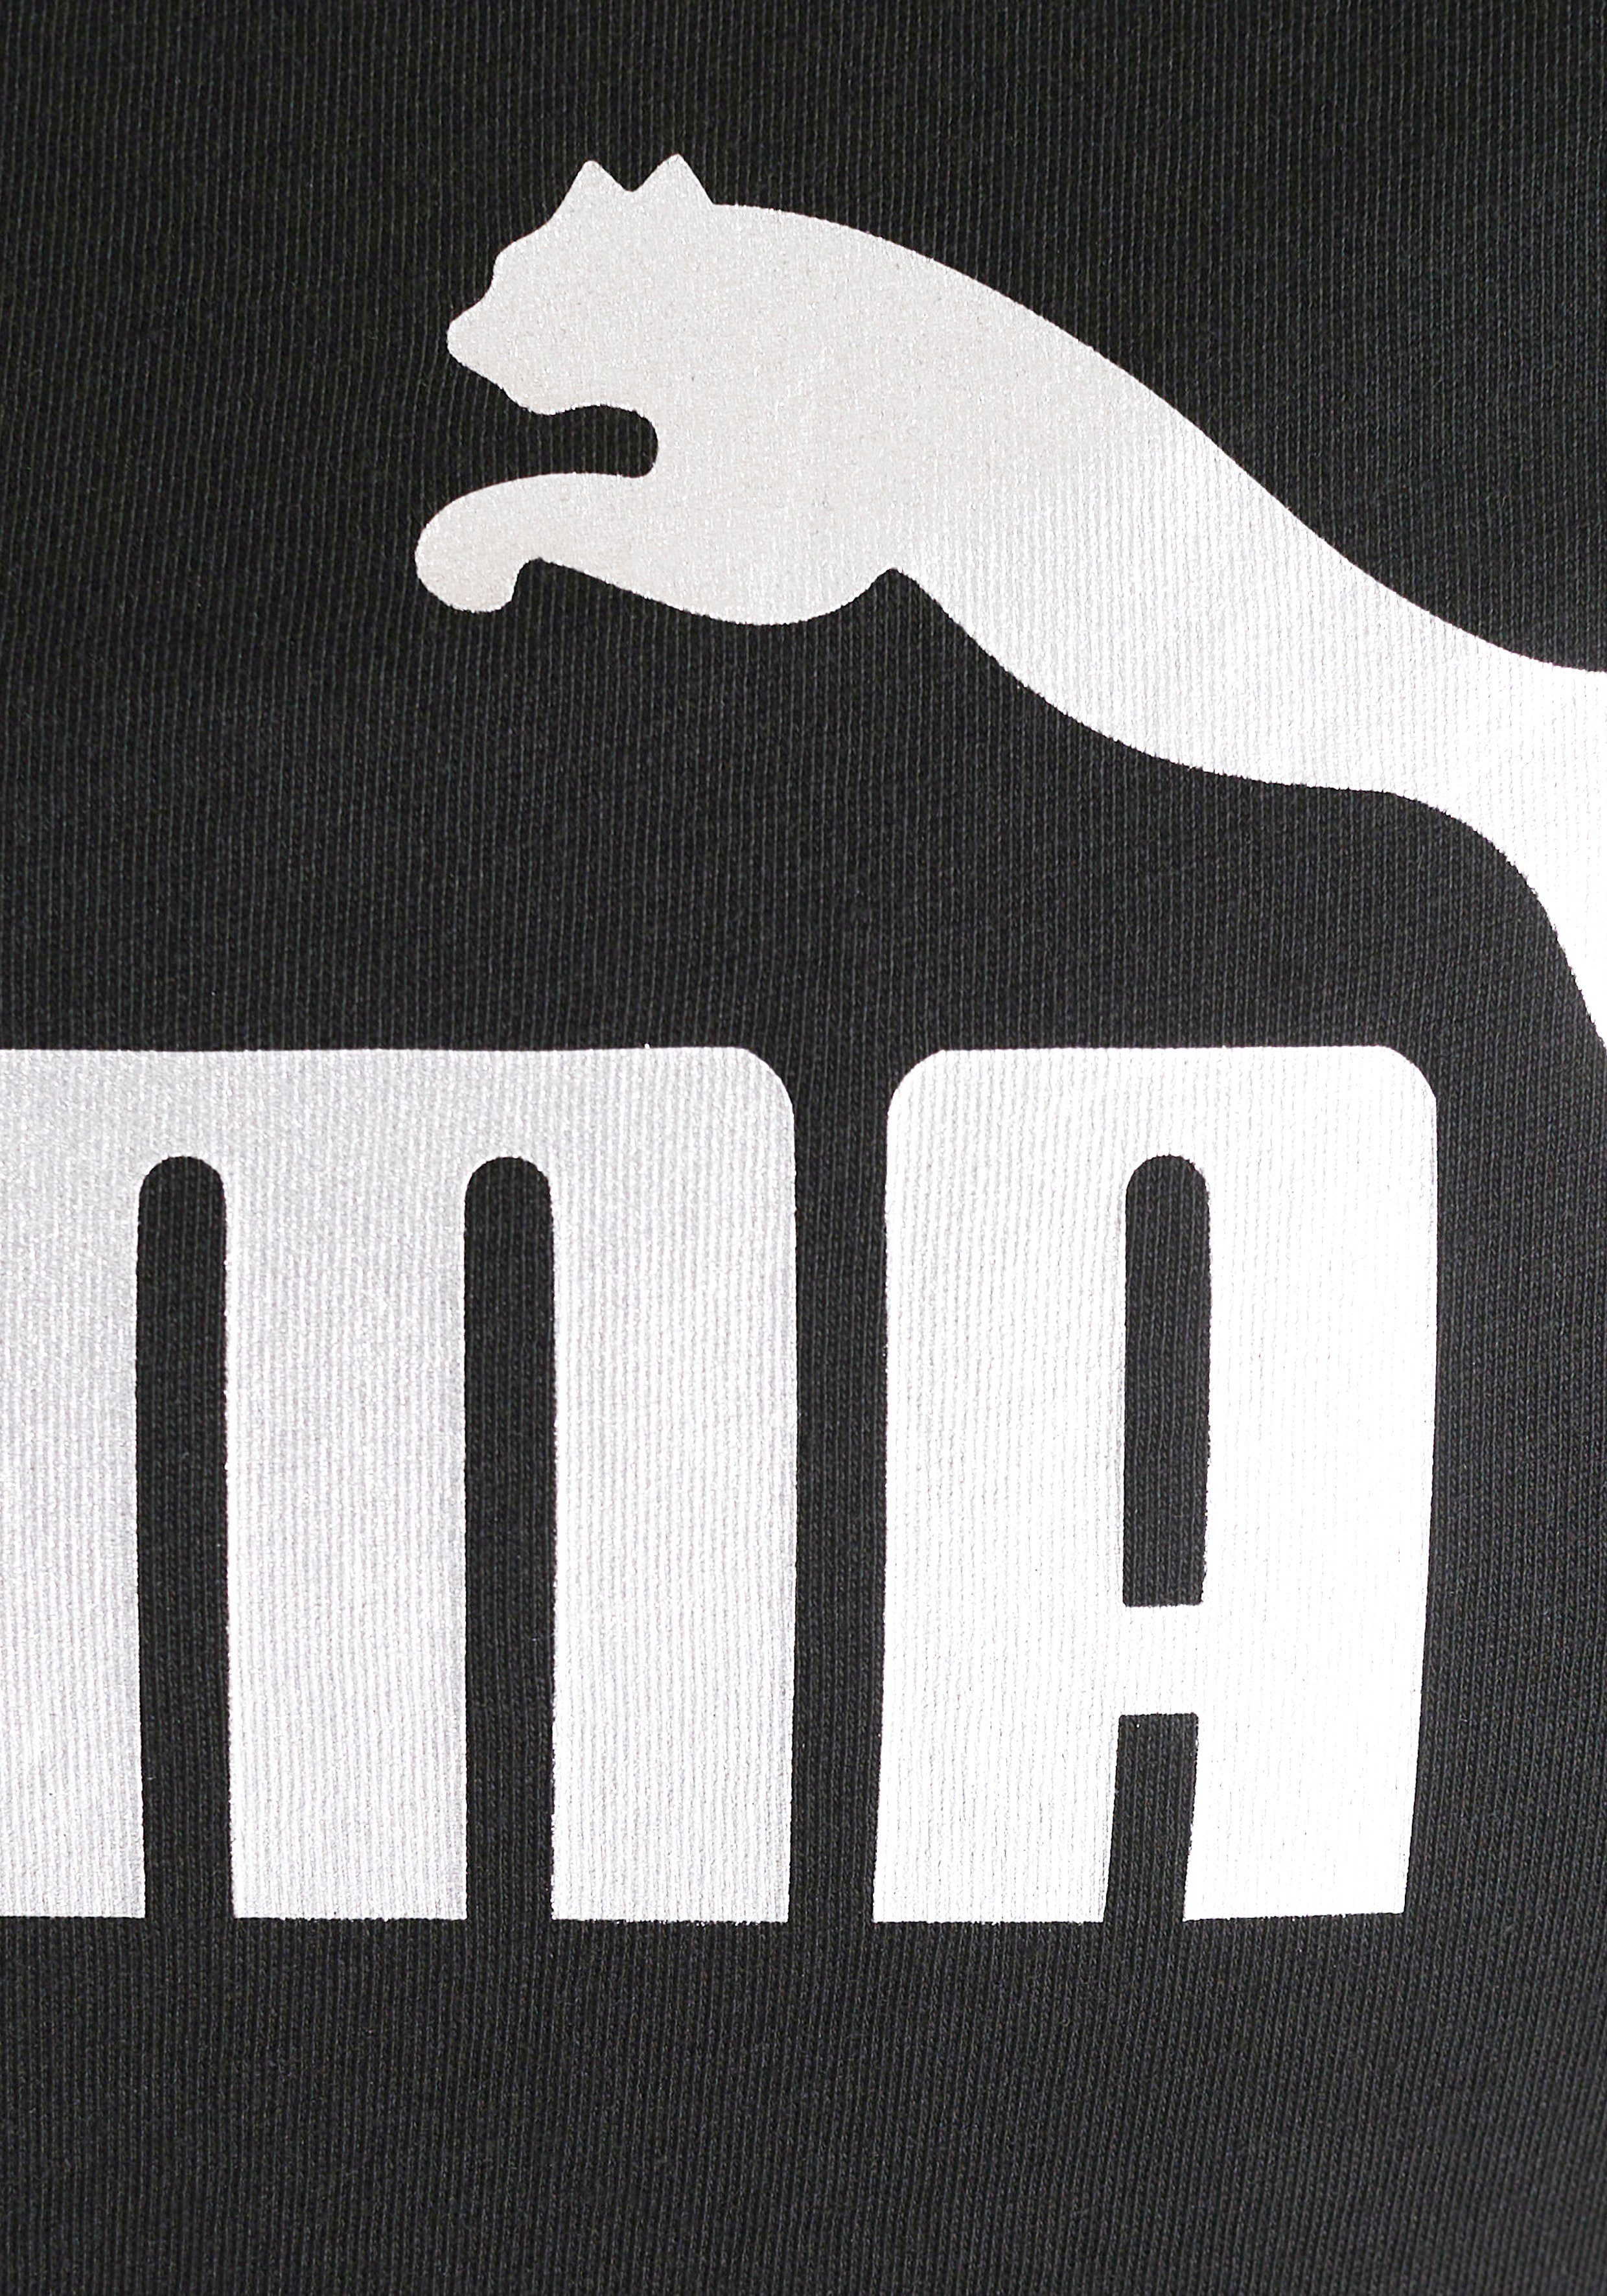 T-Shirt METALLIC PUMA LOGO Puma TEE ESS+ Black-silver metallic